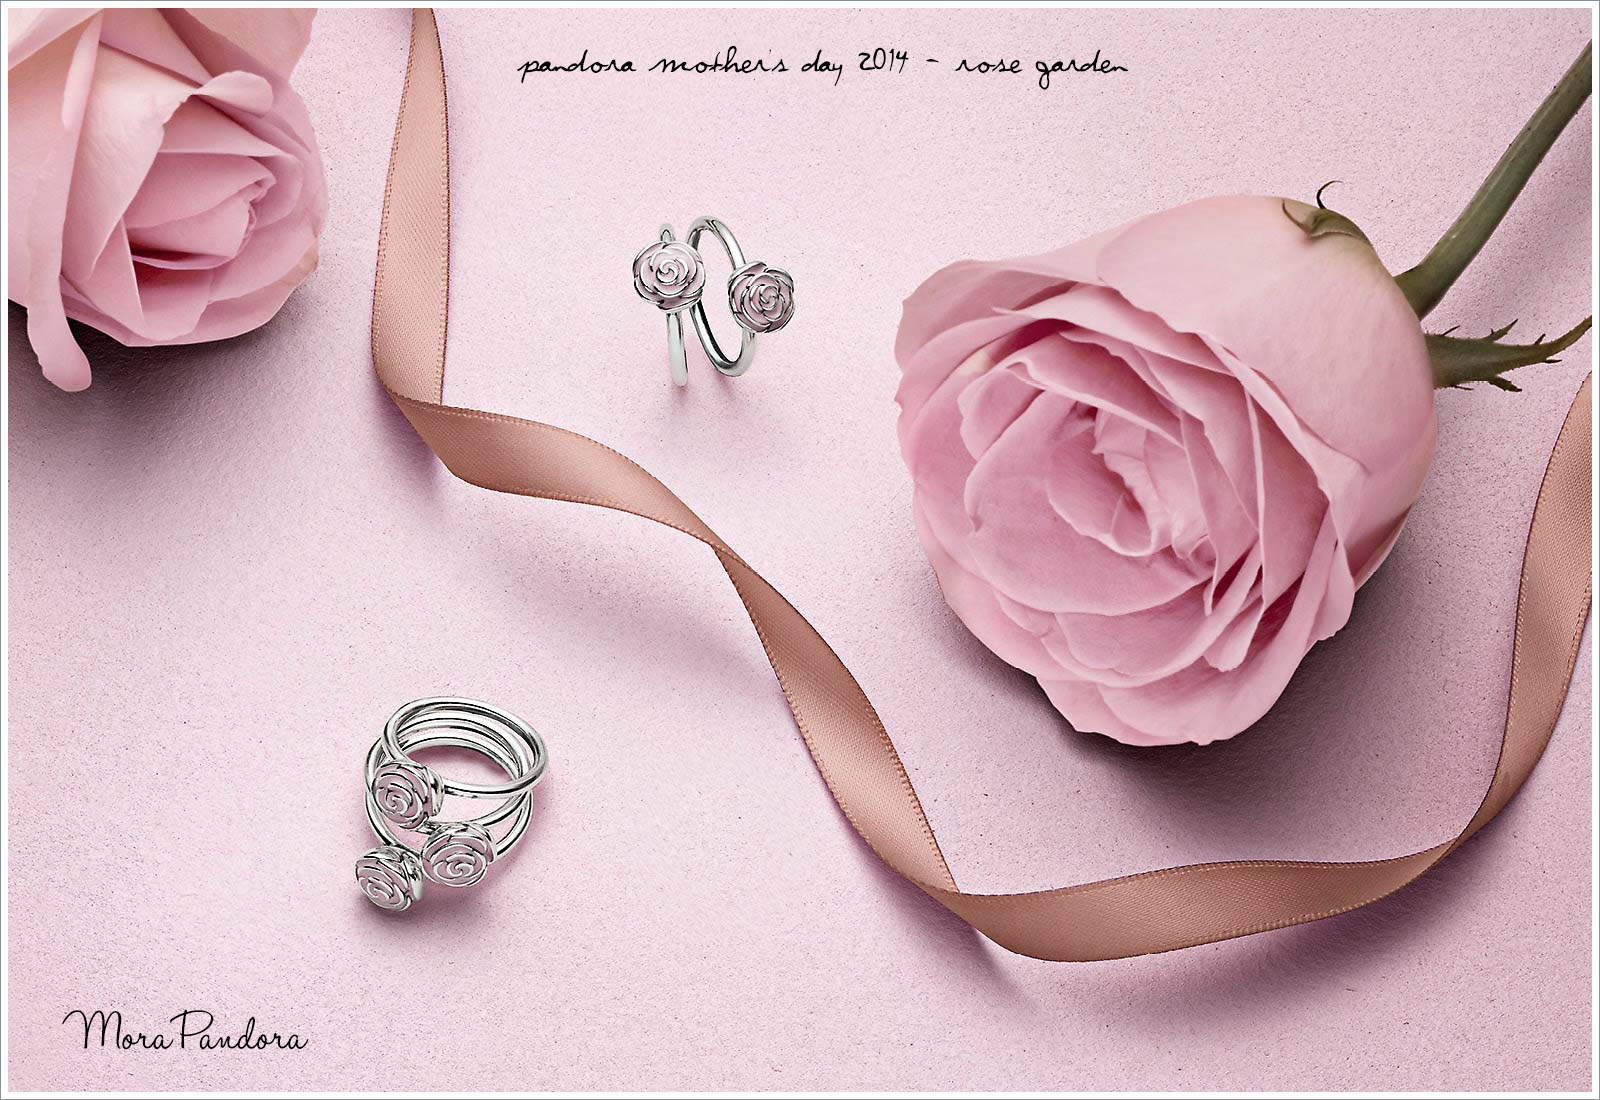 pandora mother's day campaign 2014 rose garden